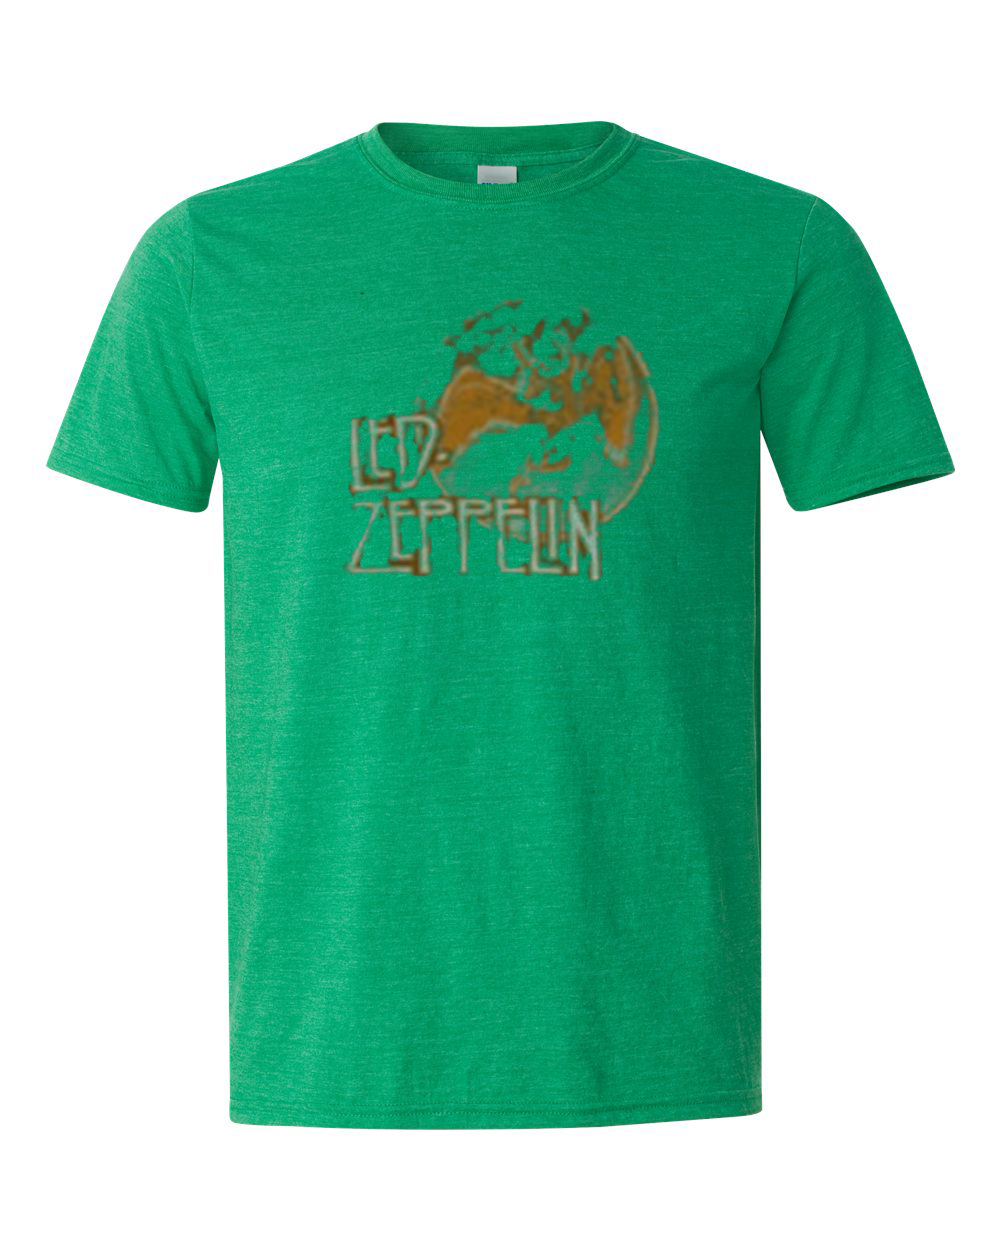 green led zeppelin t-shirt